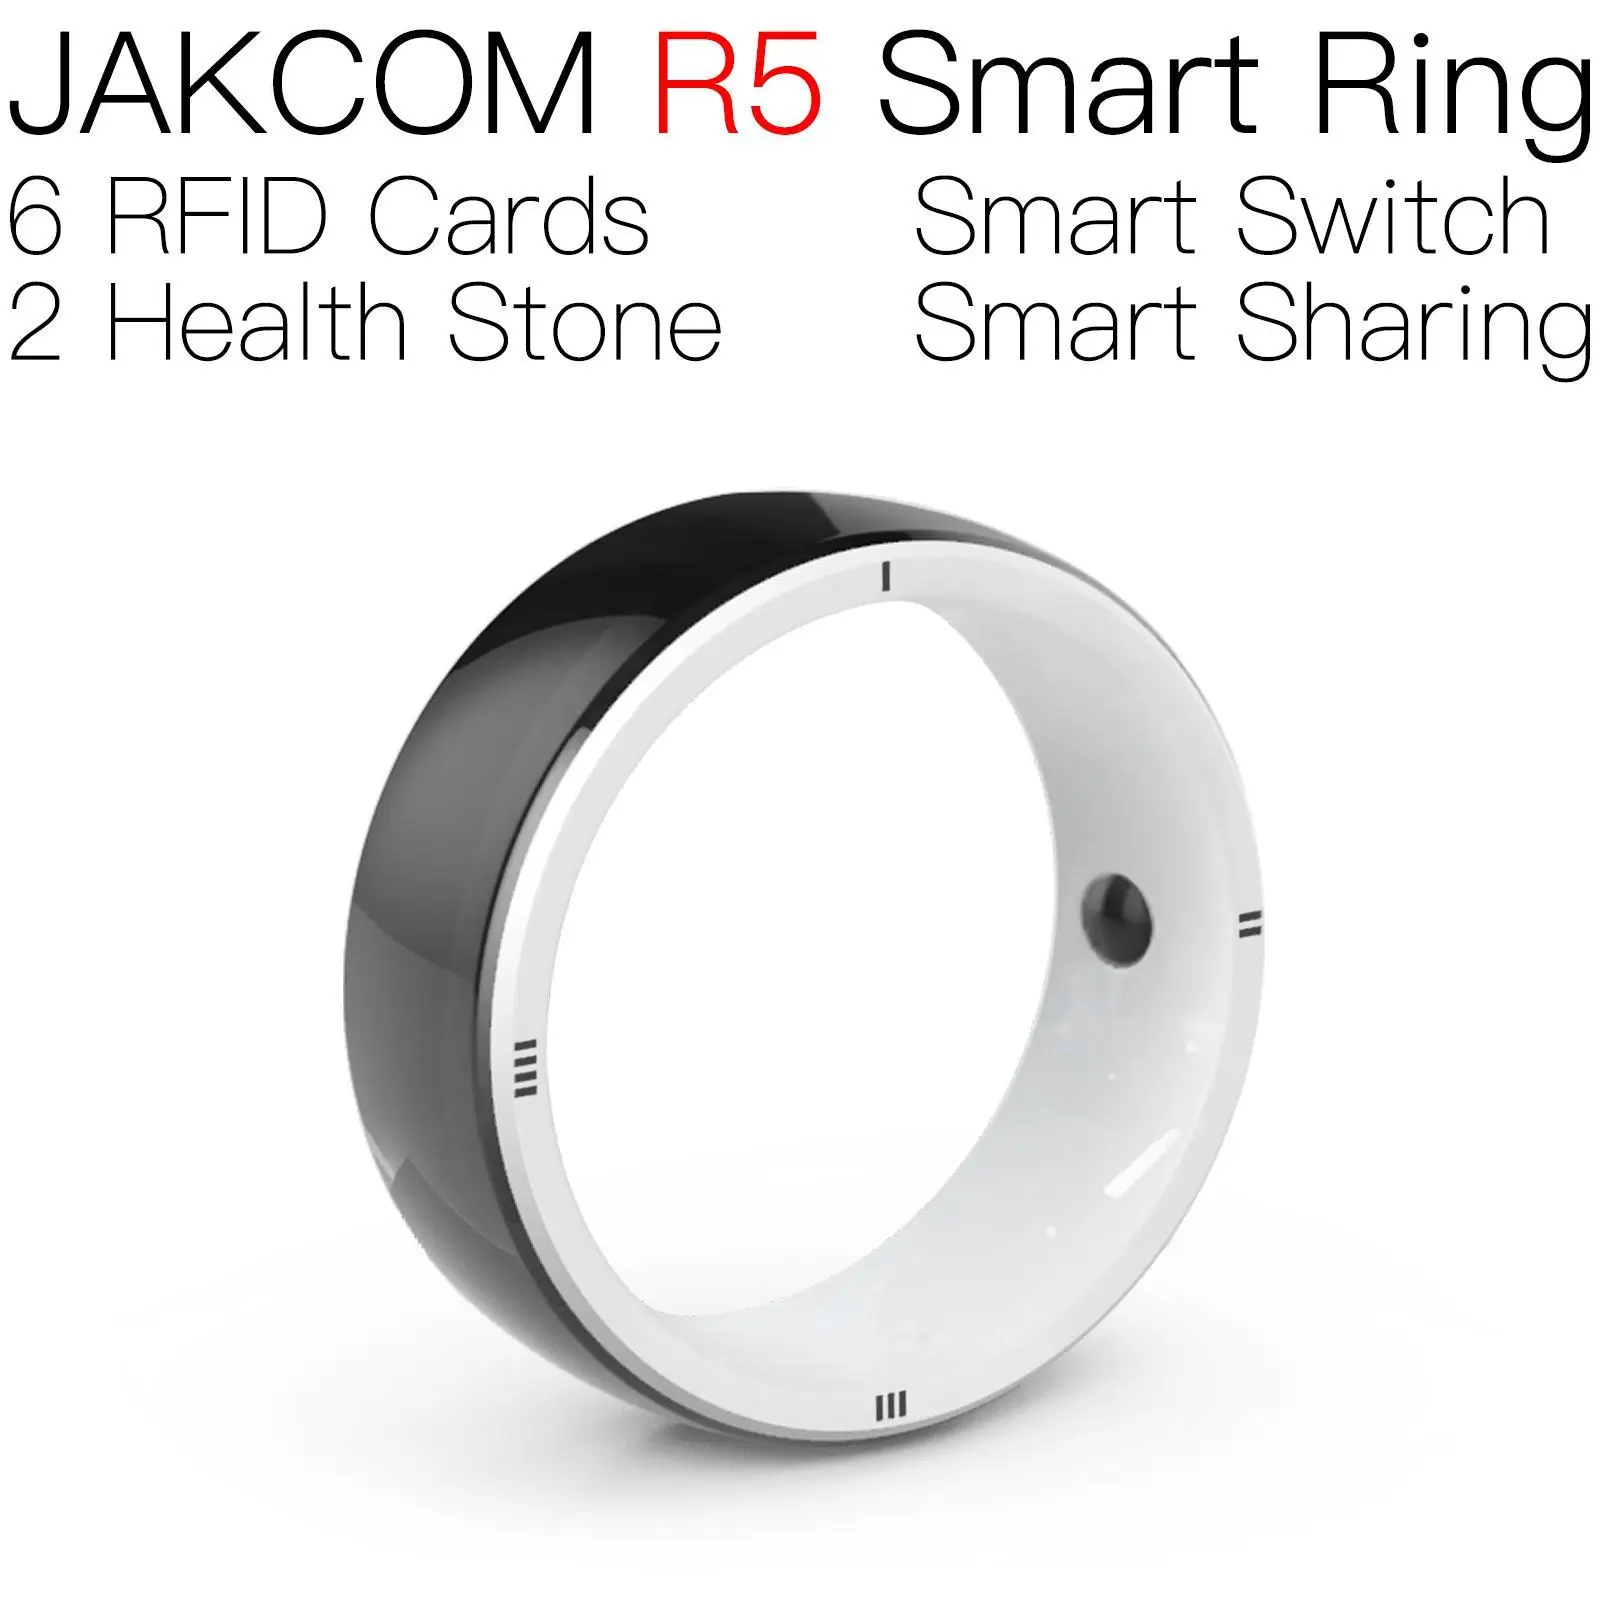 

JAKCOM R5 Smart Ring better than hbo max sakura micro nfc chip rfid tags 125khz rewritable handheld writer electronic price tag